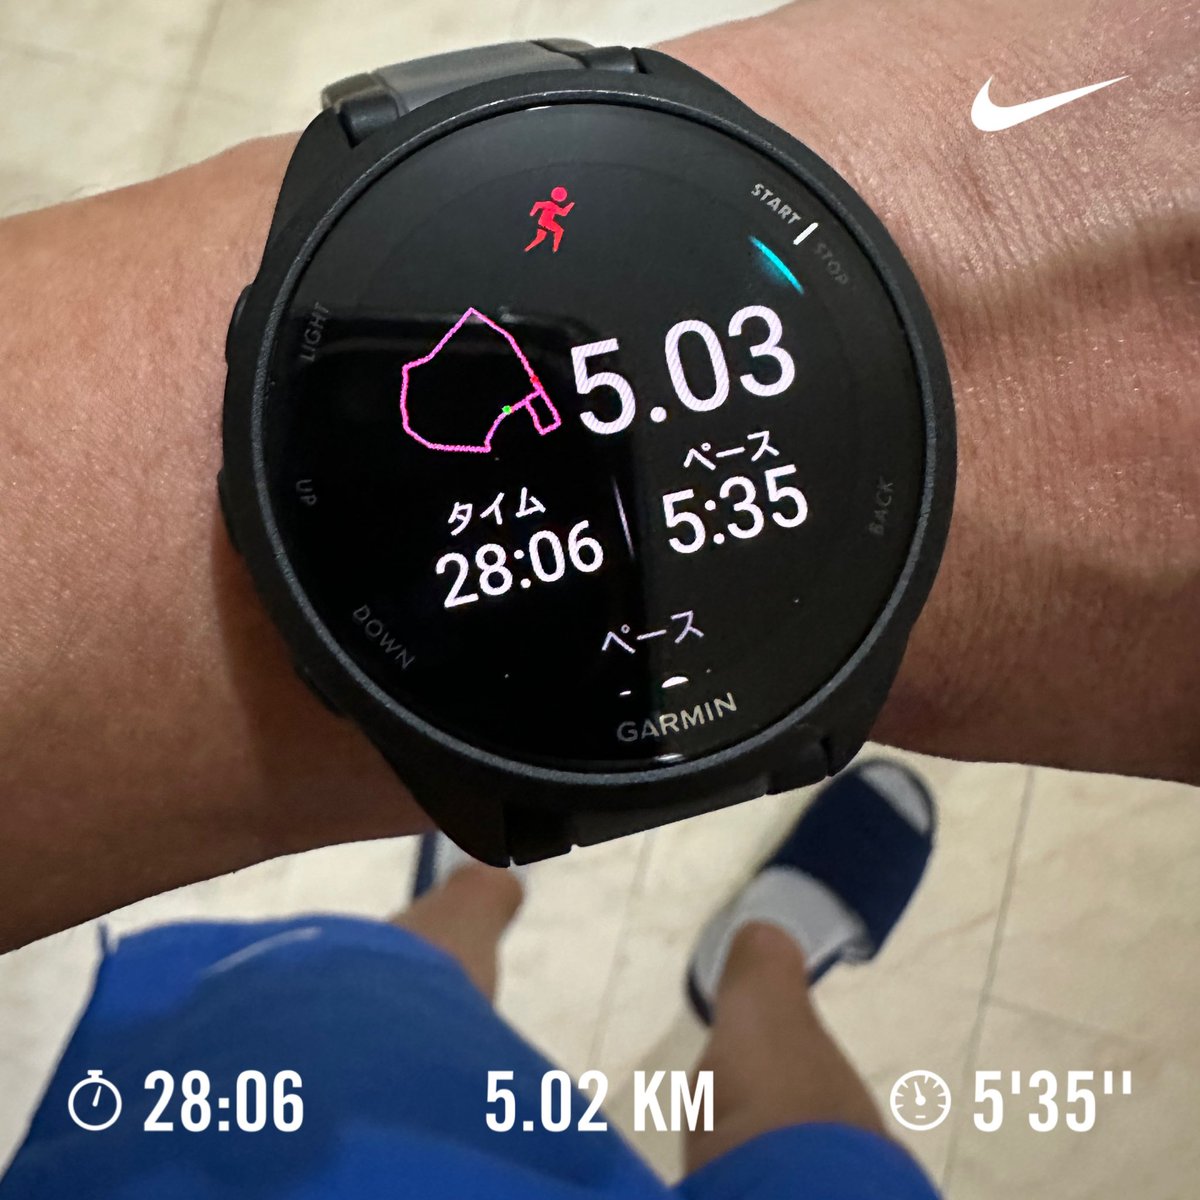 5km Runしました。今日は少しキツかったけど走り切りました。ランニングフォームを意識したからかいつもよりペースが早かった。とにかくスッキリです。

#NRC #running #Garmin #GarminPH #forerunner165